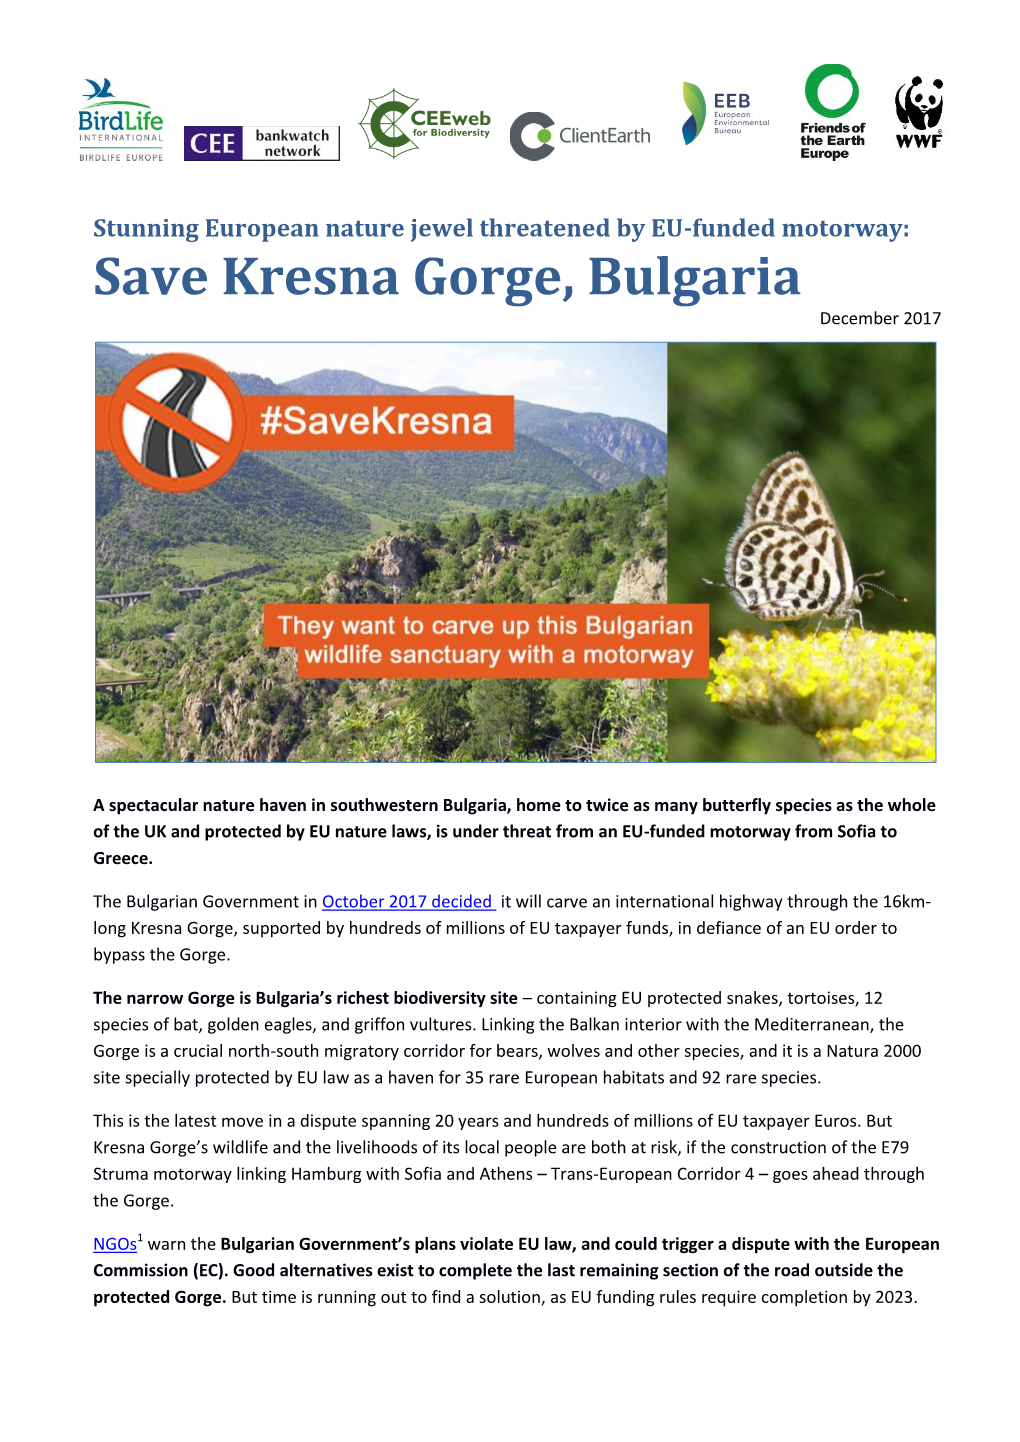 Save Kresna Gorge, Bulgaria December 2017